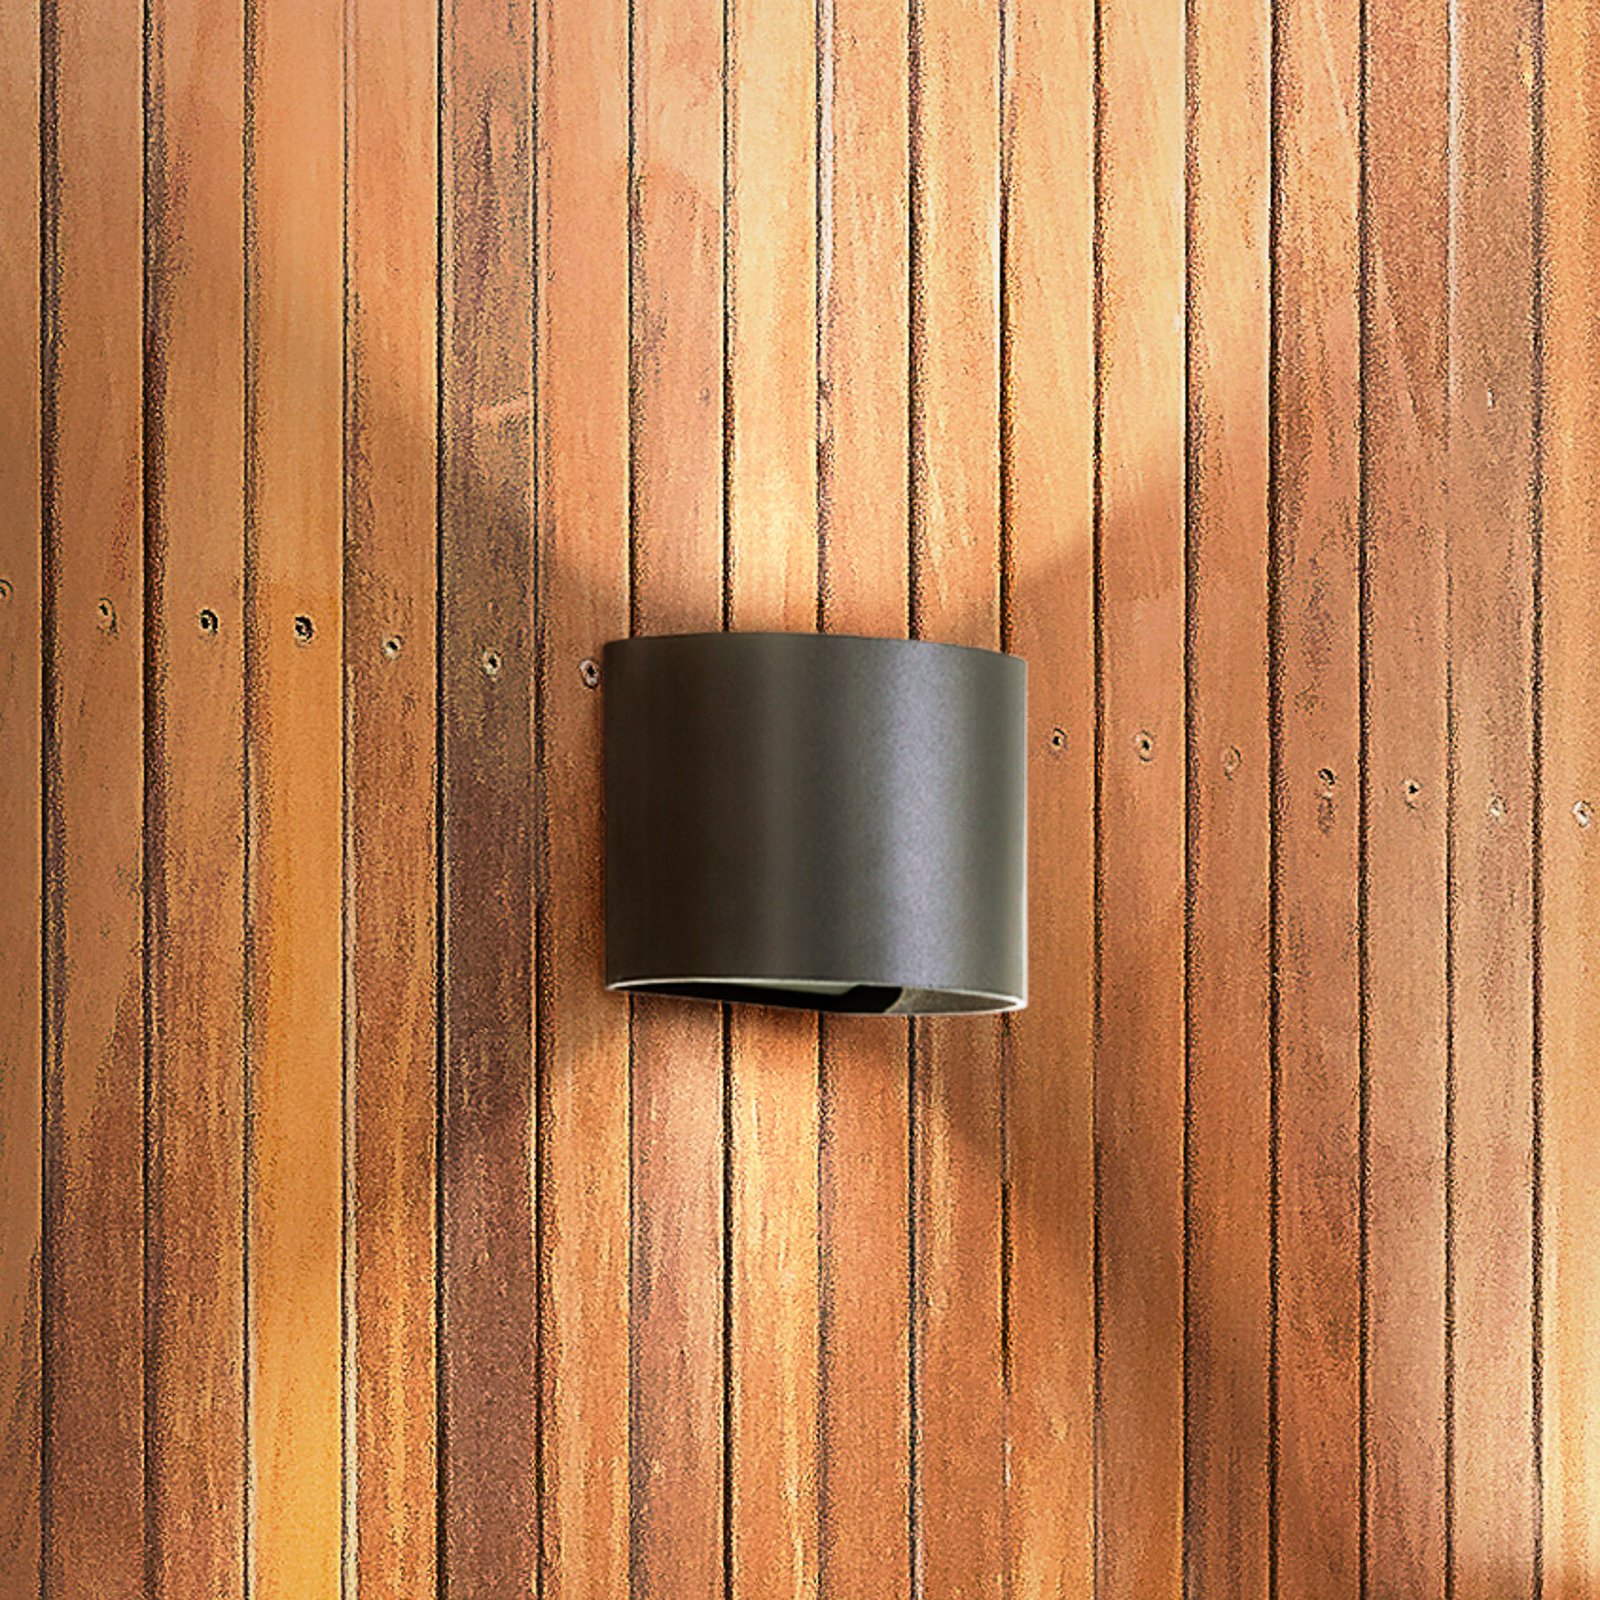 LED outdoor wall light Matteo, black, width 14 cm, 2-bulb.